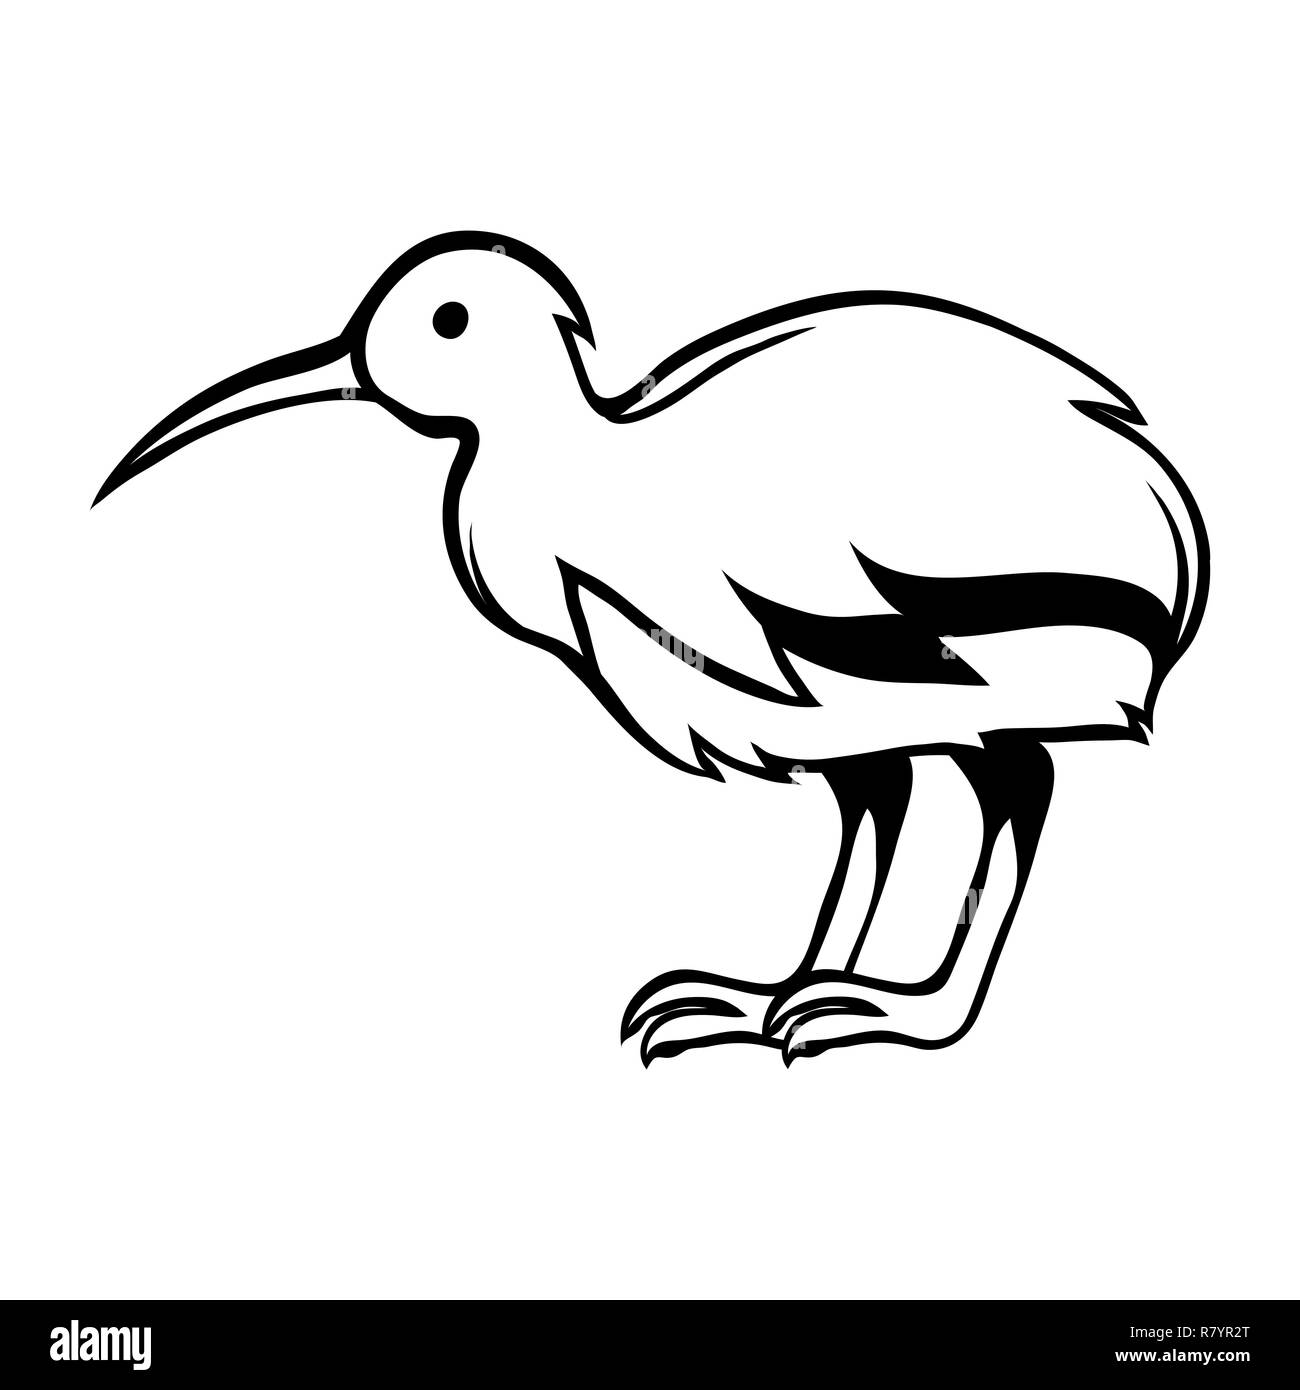 Black and white bird kiwi. Stock Vector